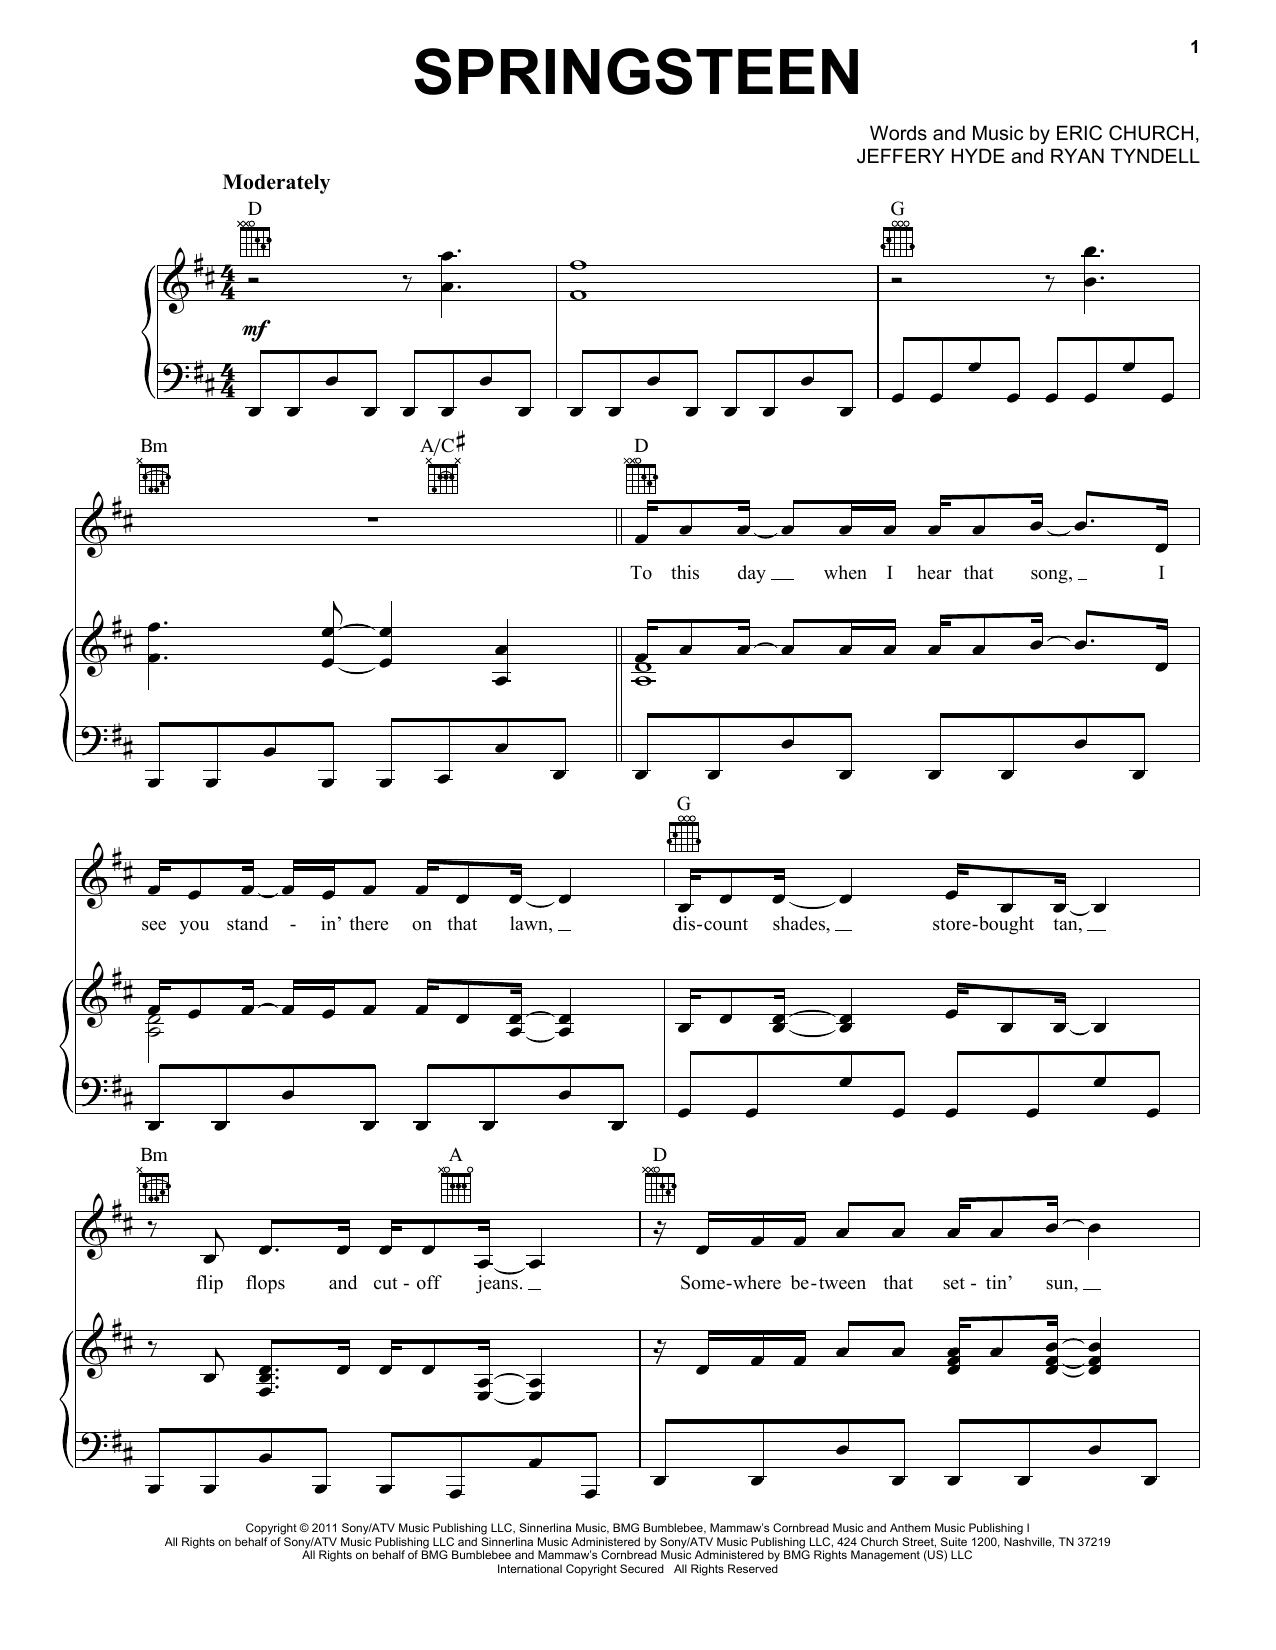 Eric Church Springsteen Sheet Music Notes & Chords for Lyrics & Chords - Download or Print PDF